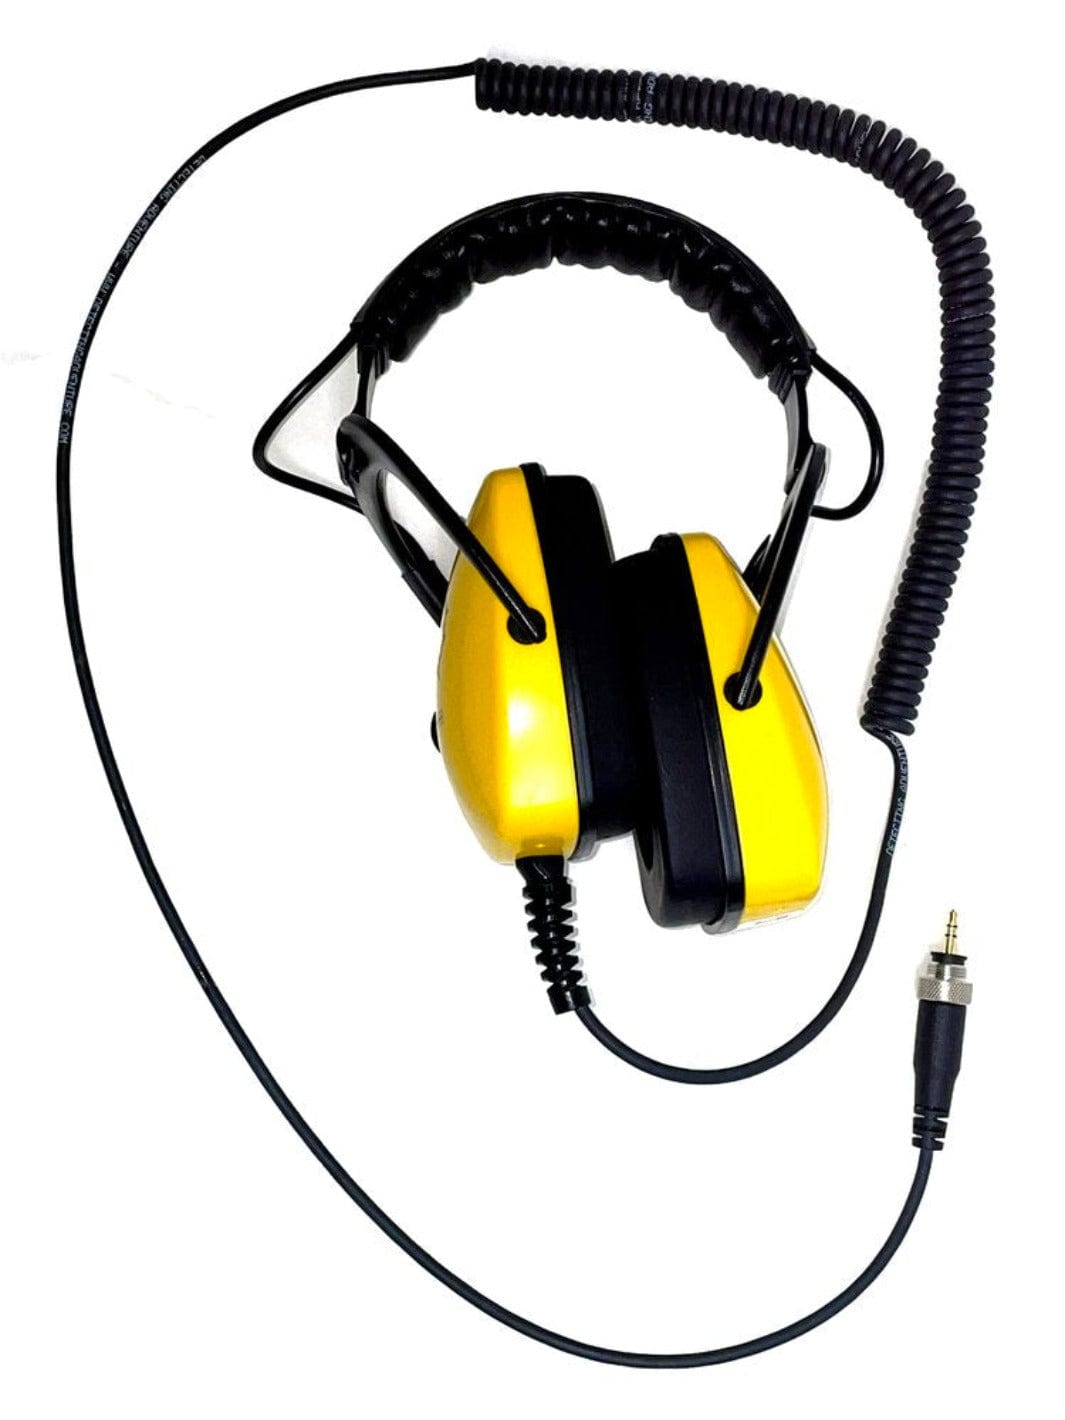 NEW - Detecting Adventure Thresher Submersible Headphones for Minelab CTX 3030 - Treasure Coast Metal Detectors